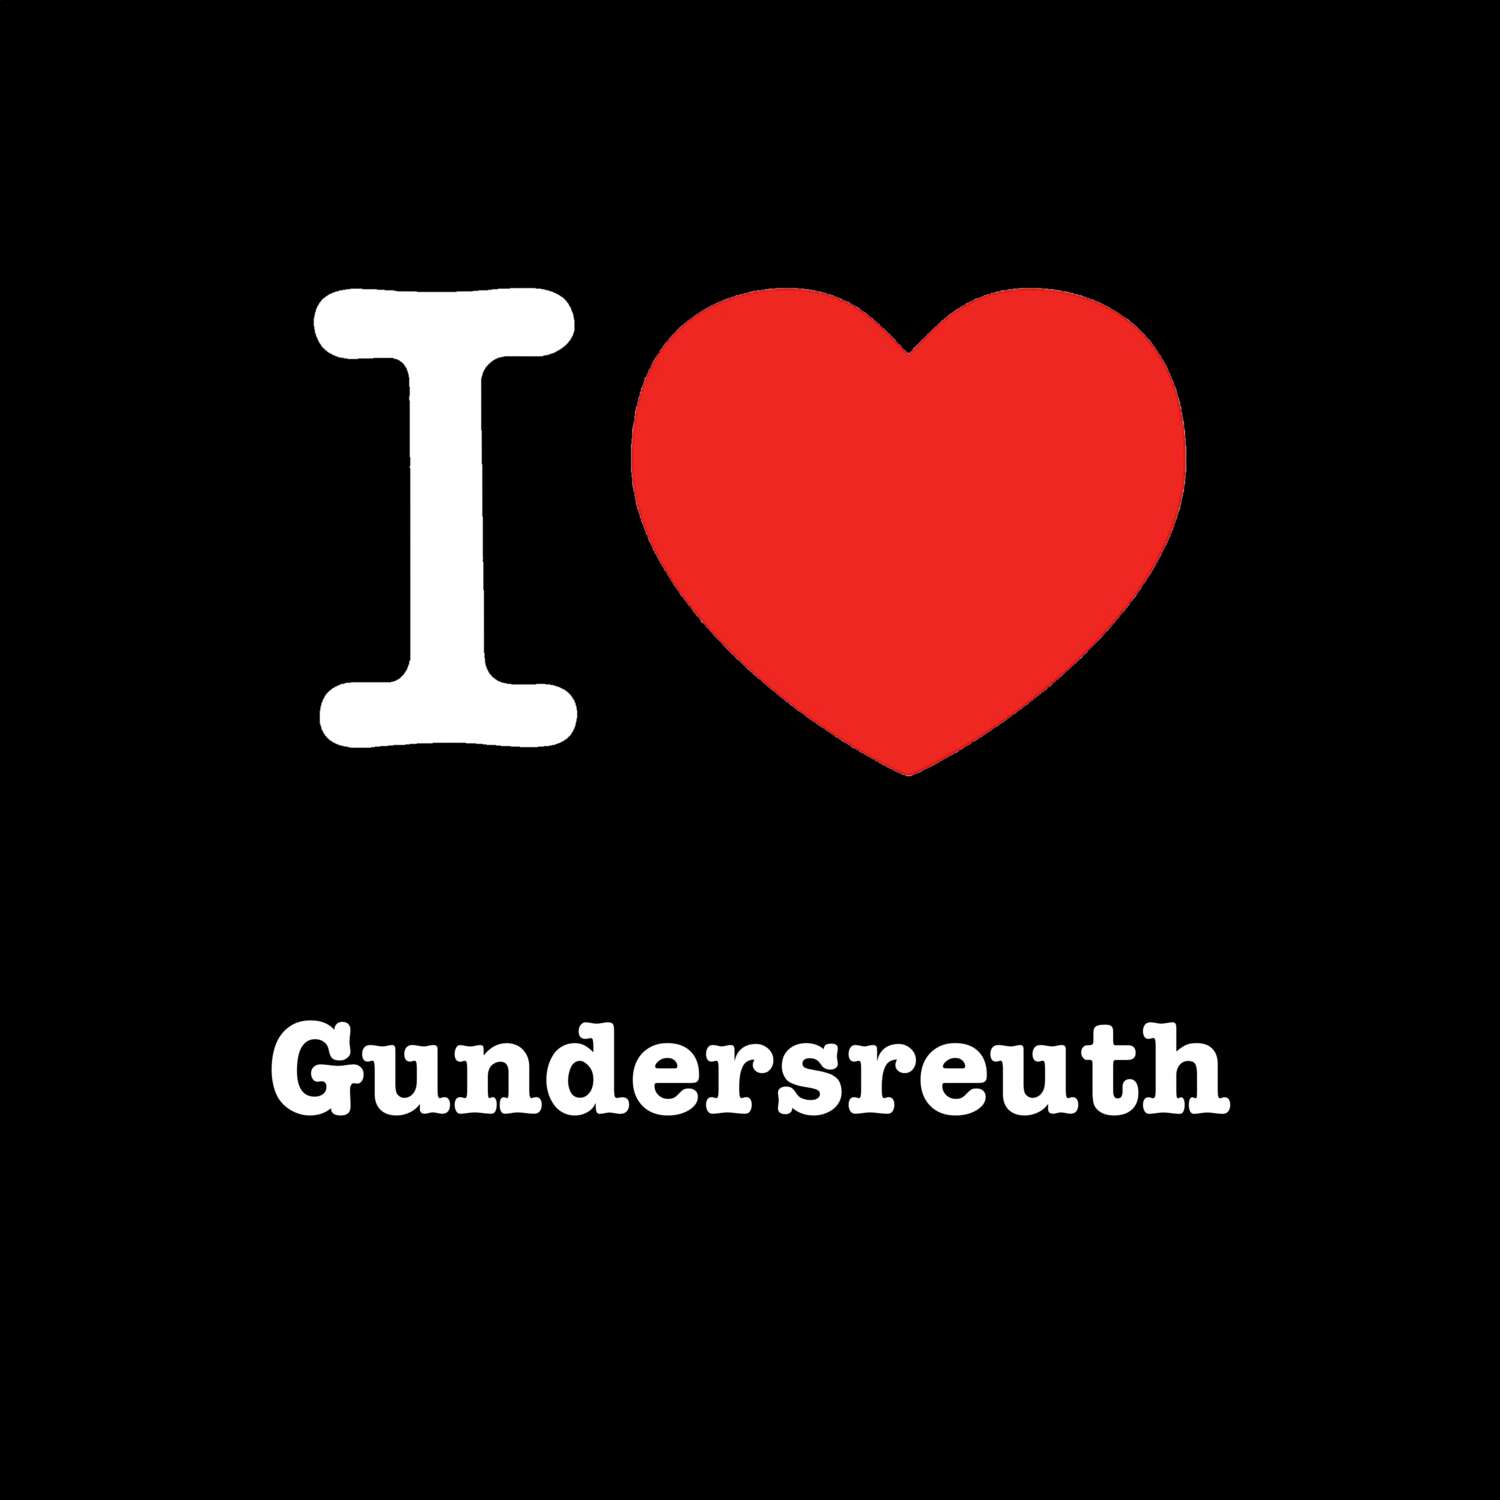 Gundersreuth T-Shirt »I love«